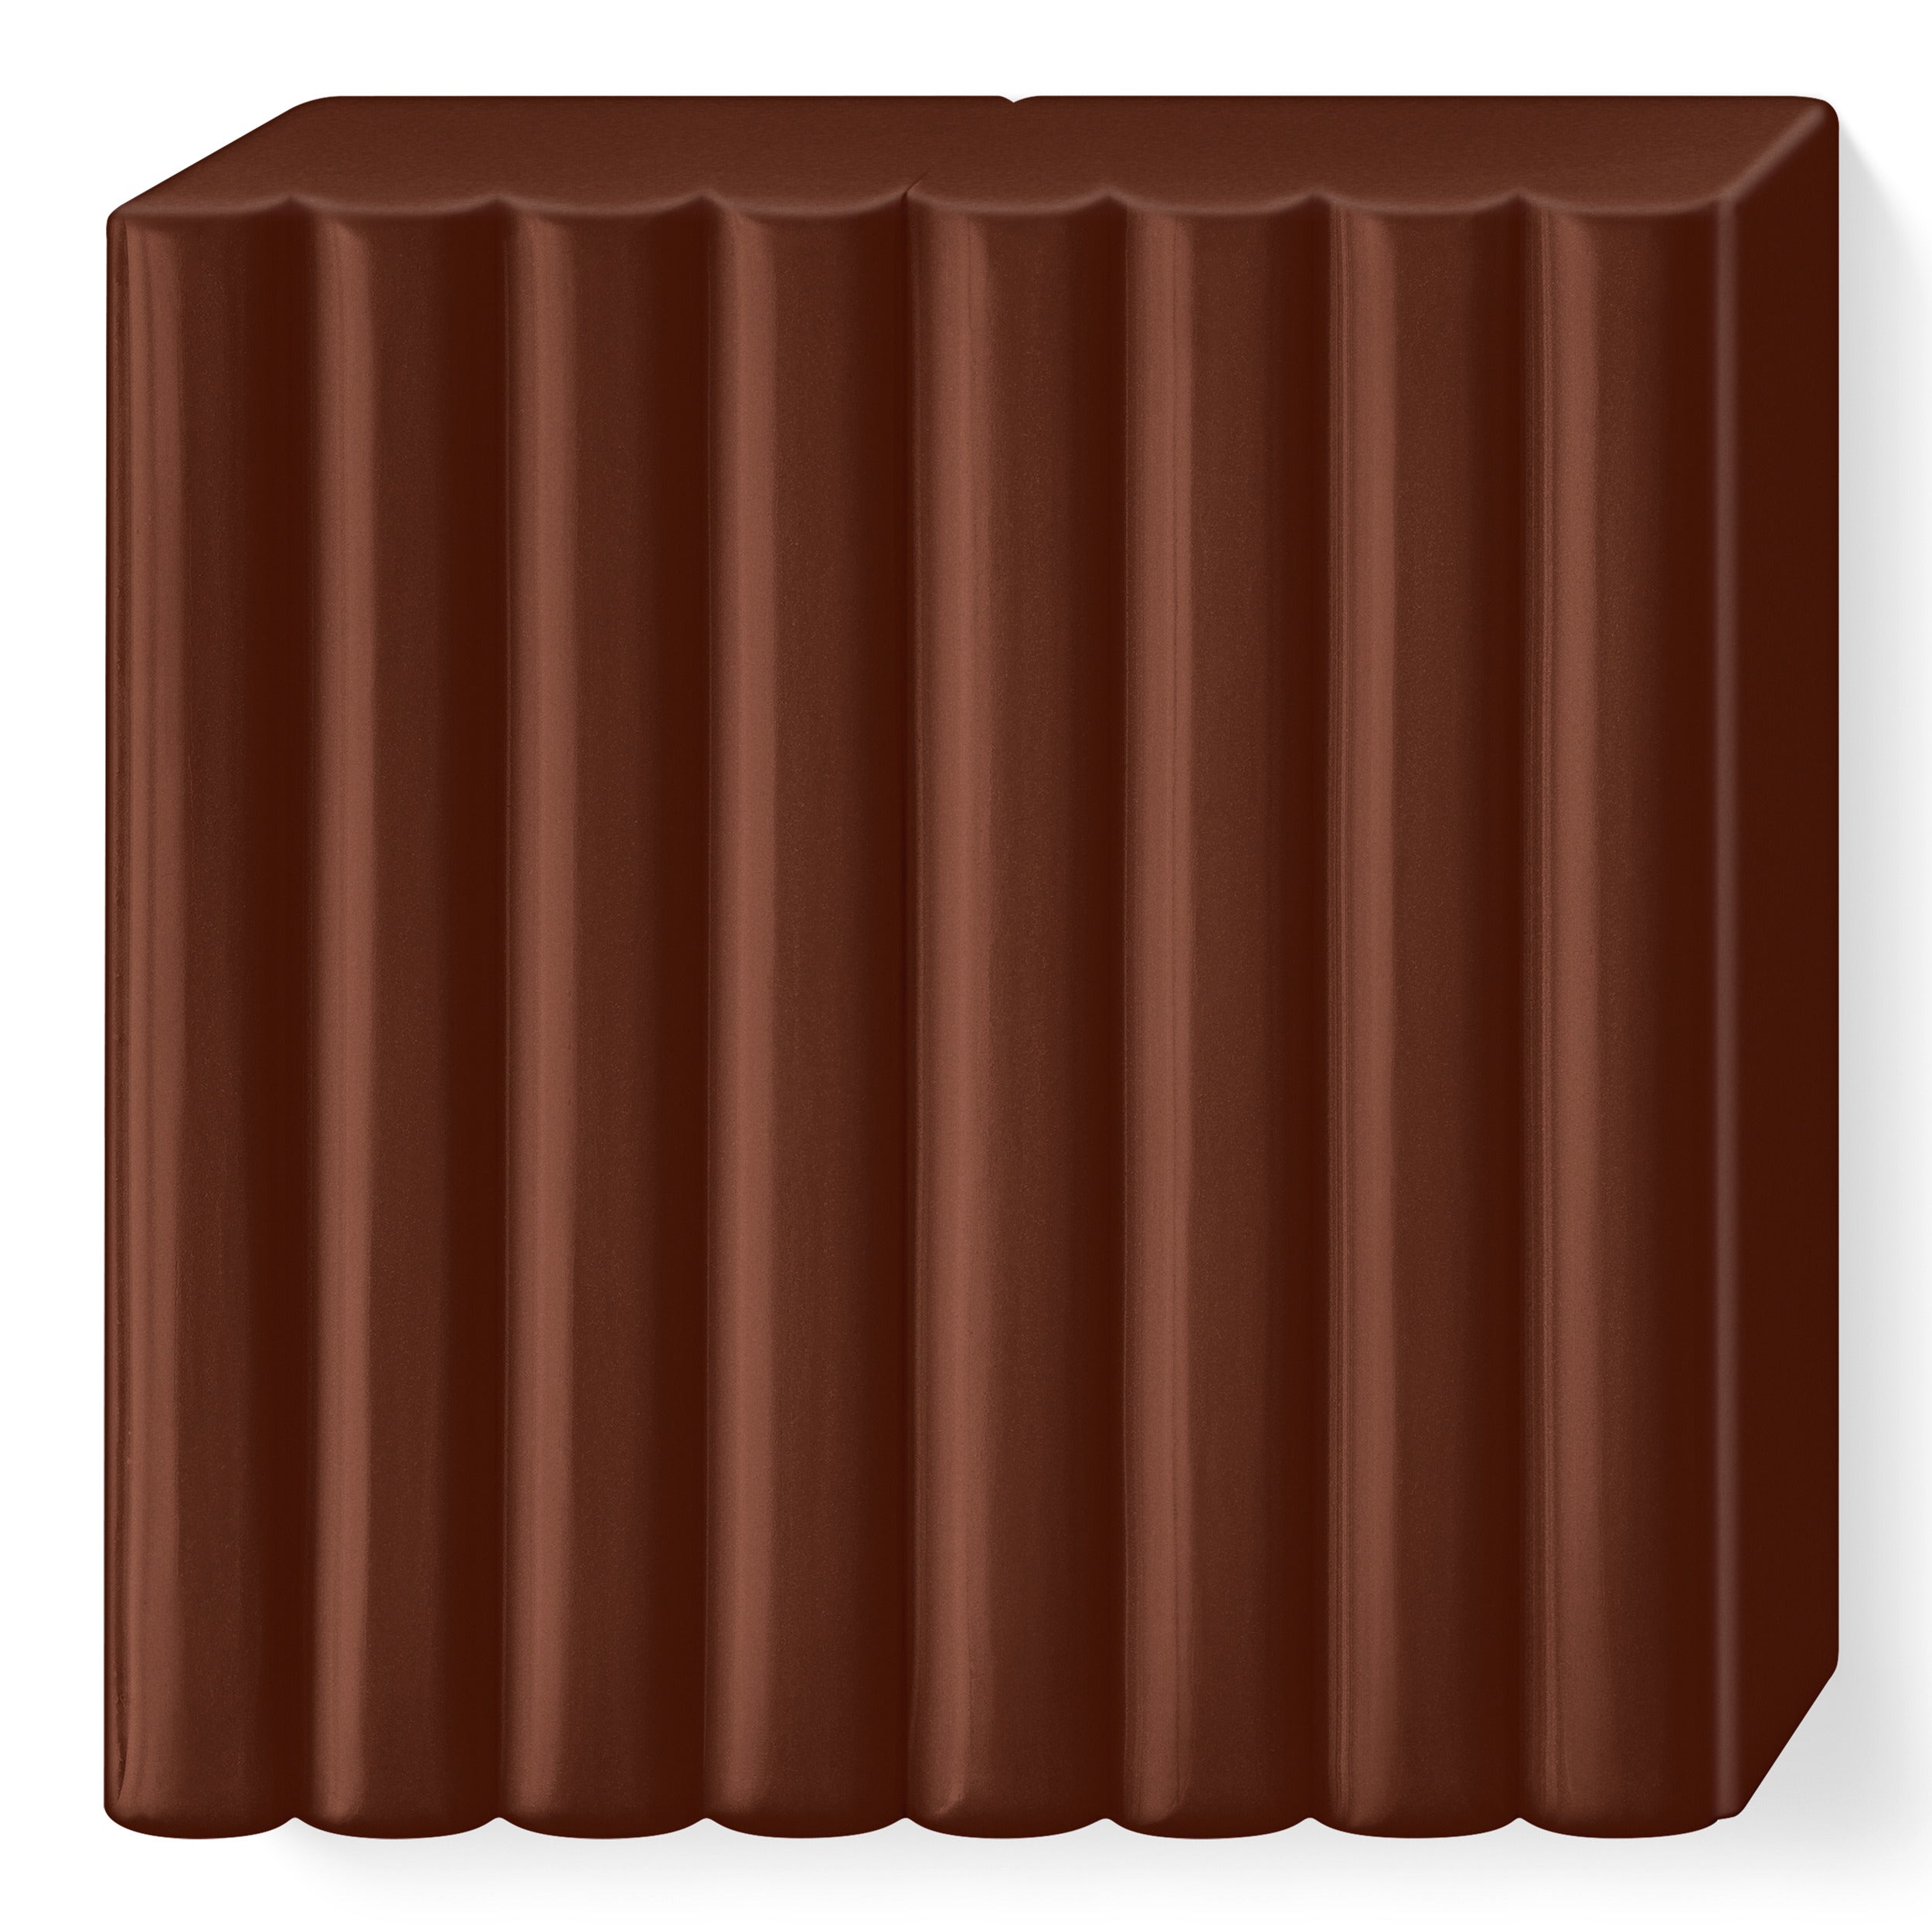 Fimo Soft Polymer Clay Standard Block 57g (2oz) - Chocolate